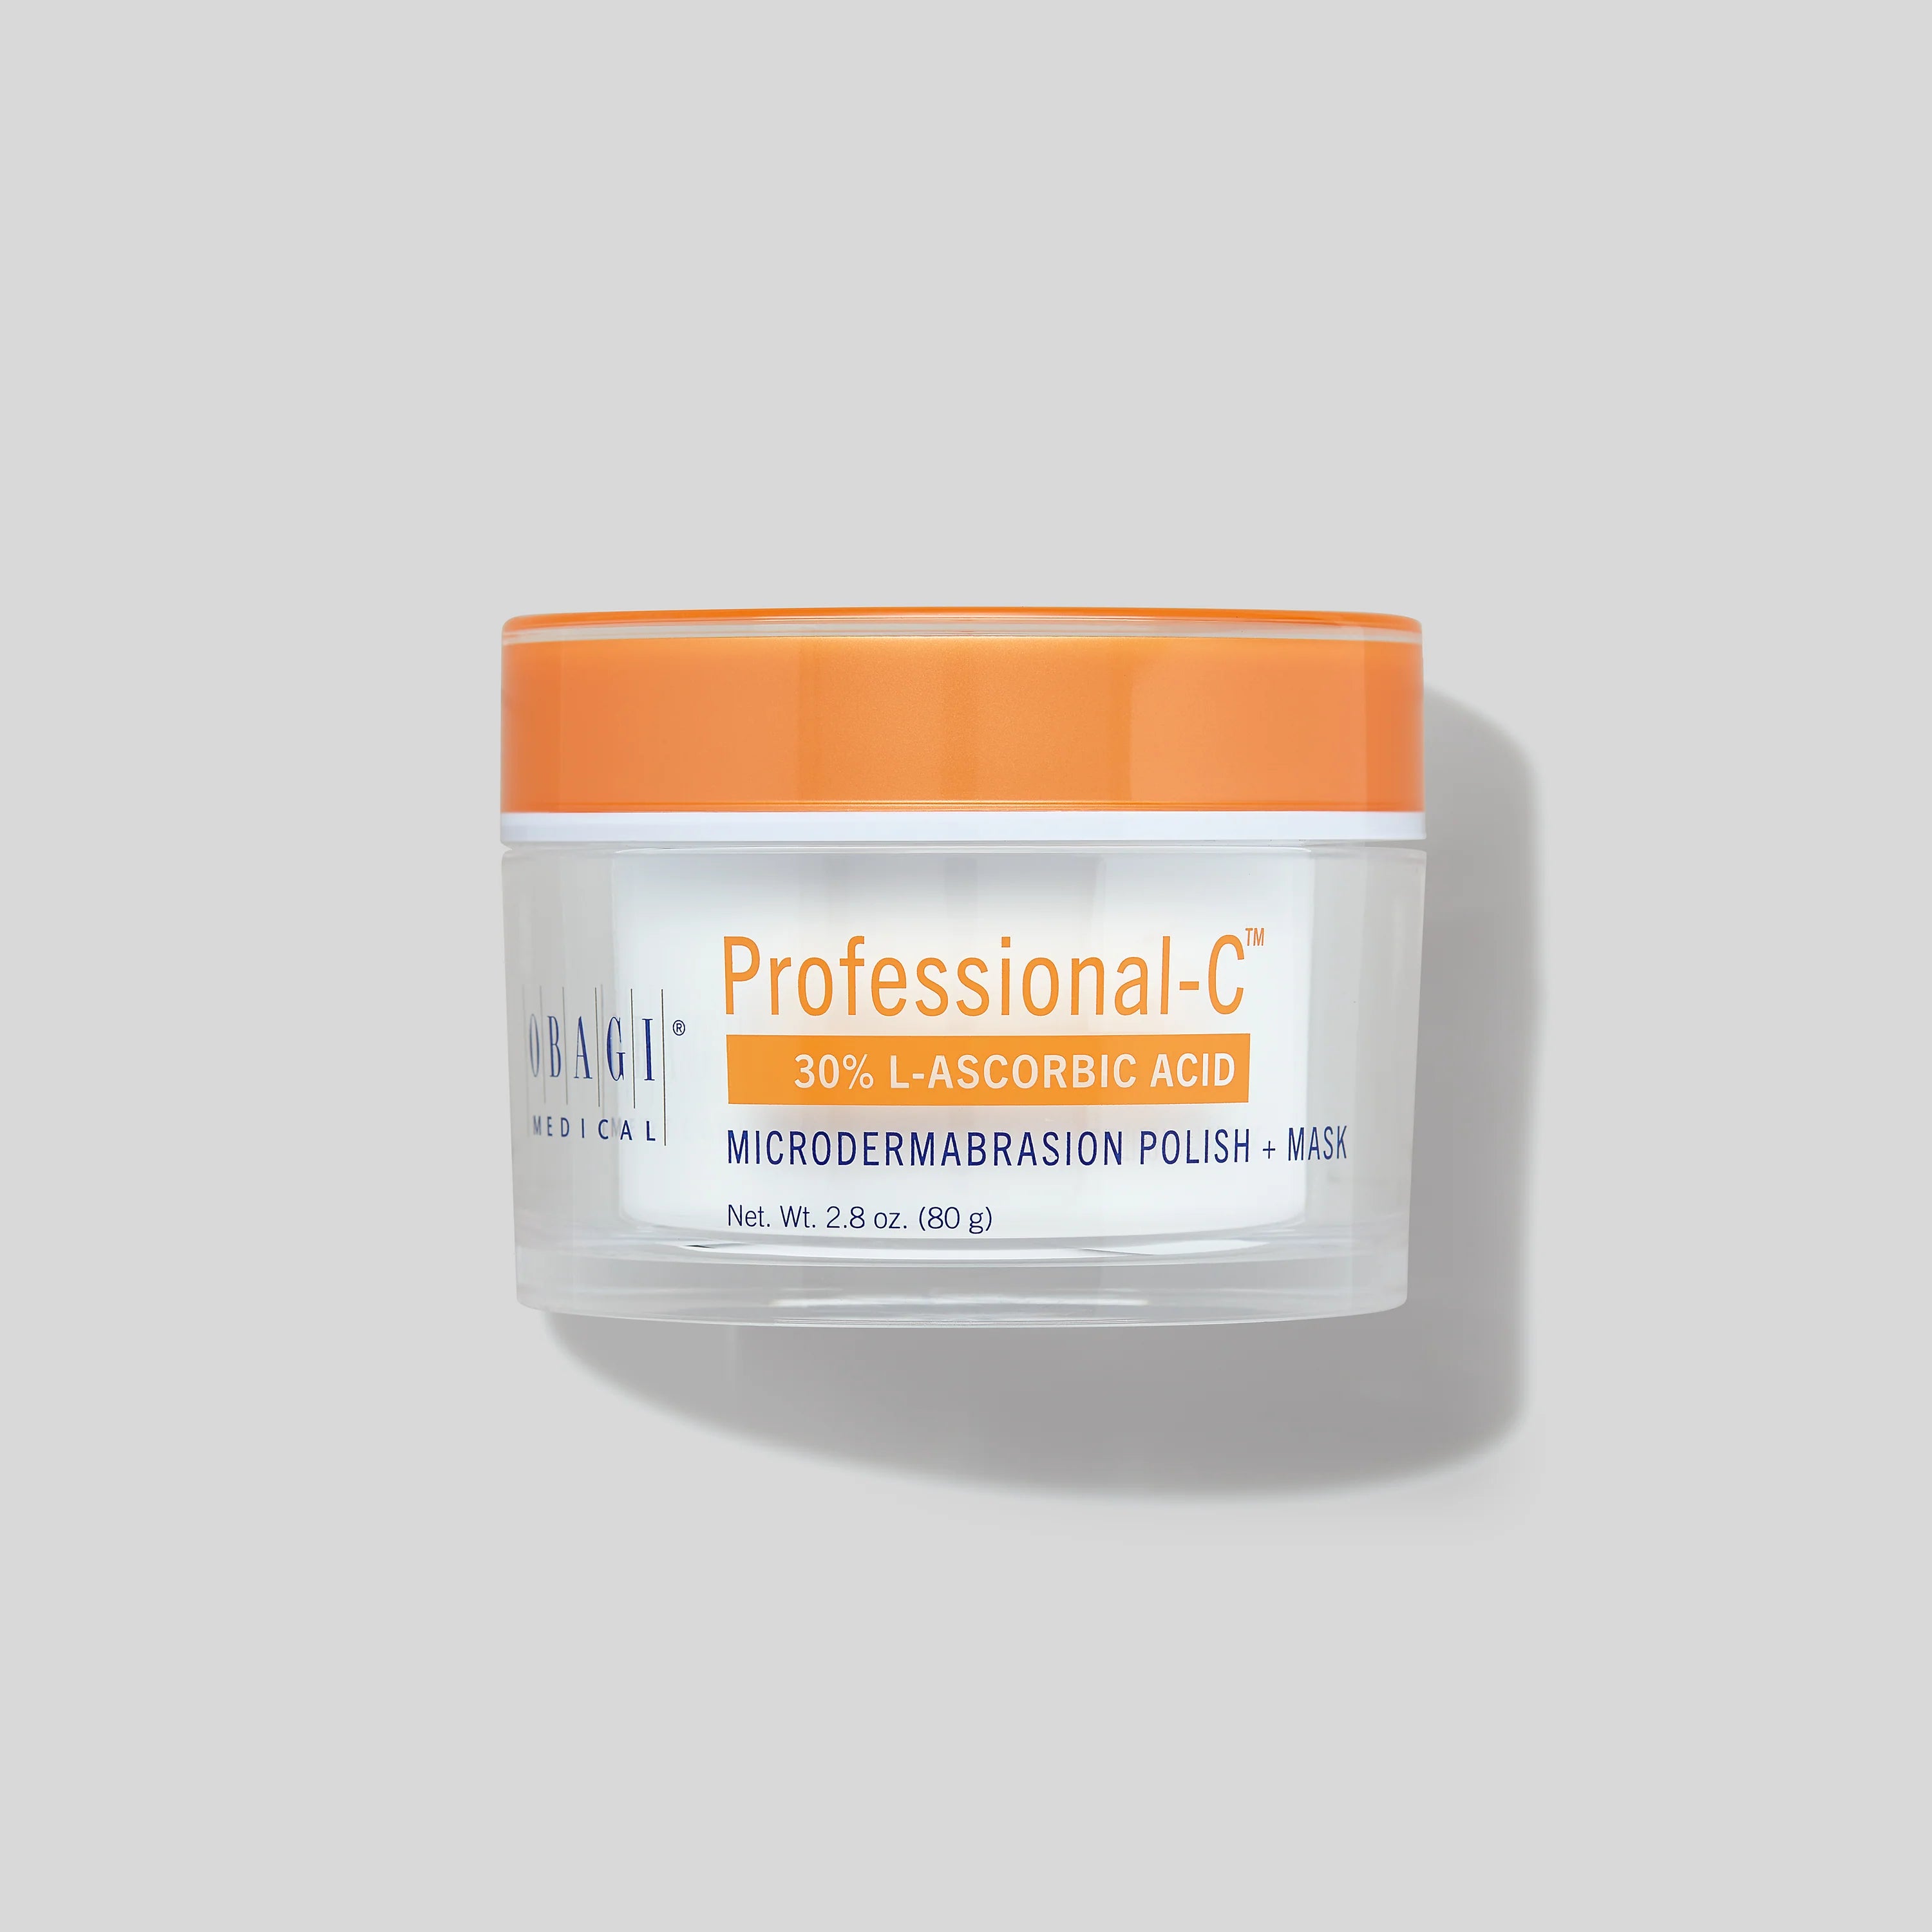 Professional-C Microdermabrasion Polish + Mask - Exfoliante de Vitamina C con Ácido L-Ascórbico al 30%